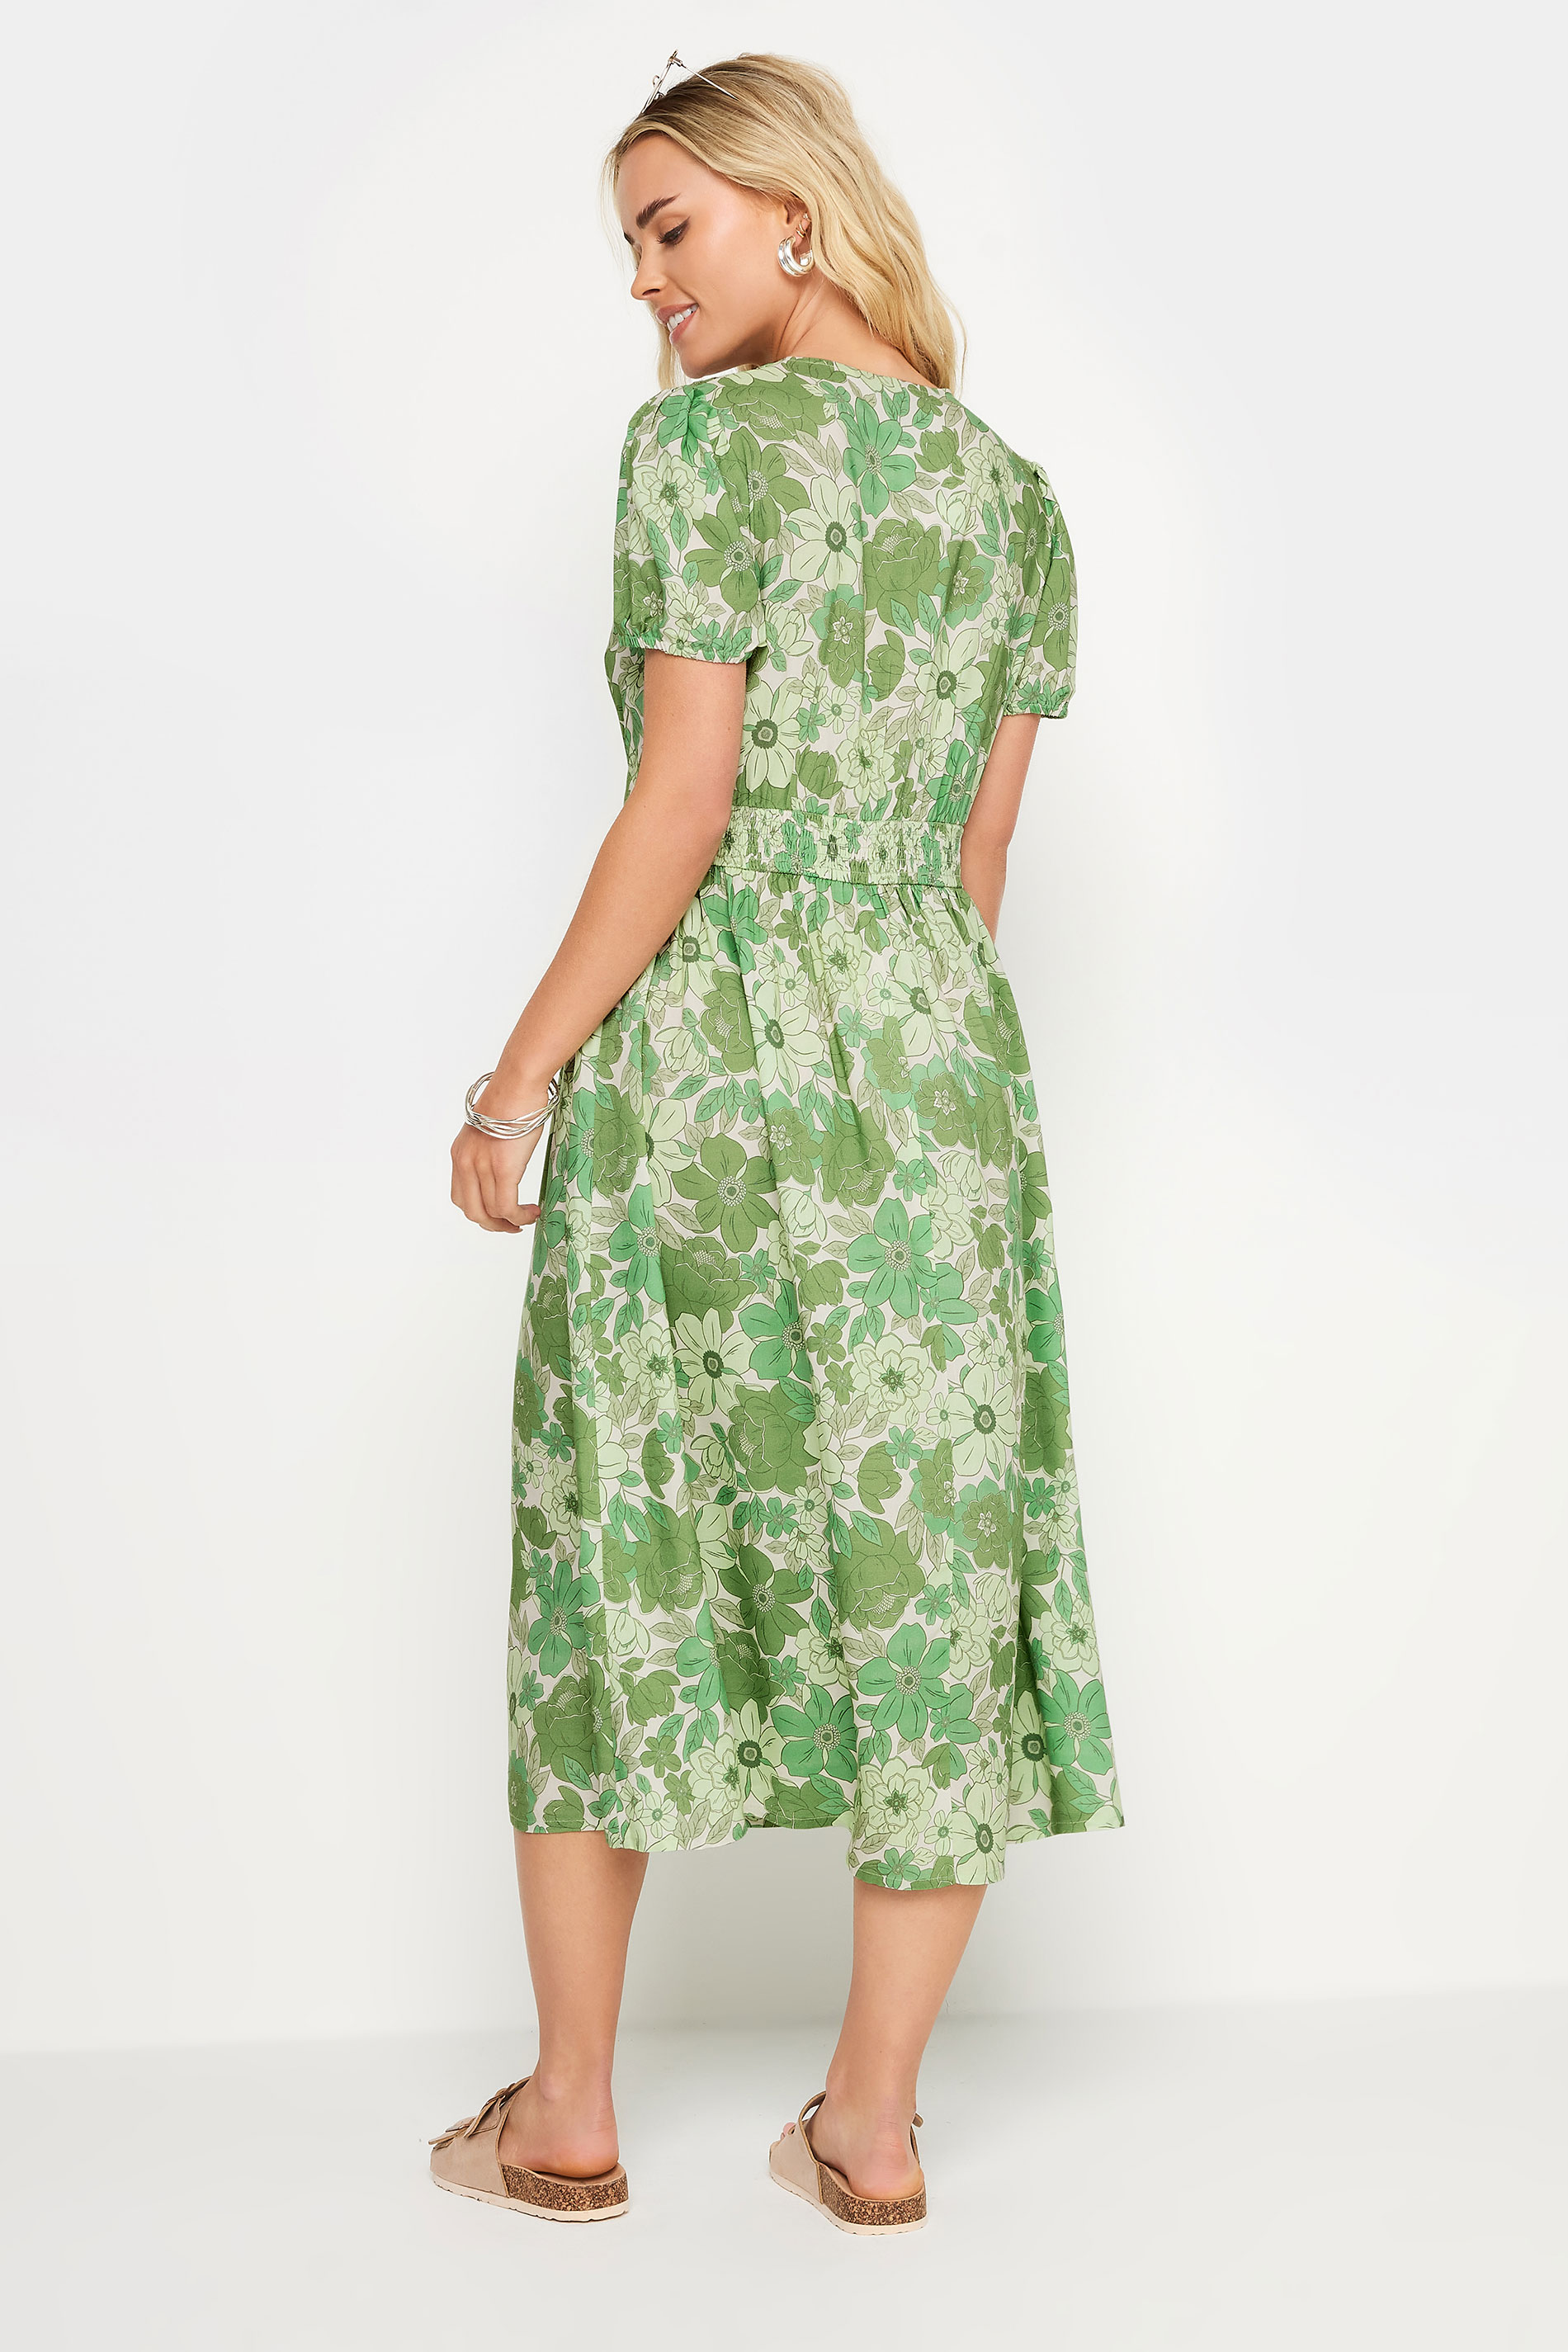 PixieGirl Green Retro Floral Print Midi Dress | PixieGirl 3